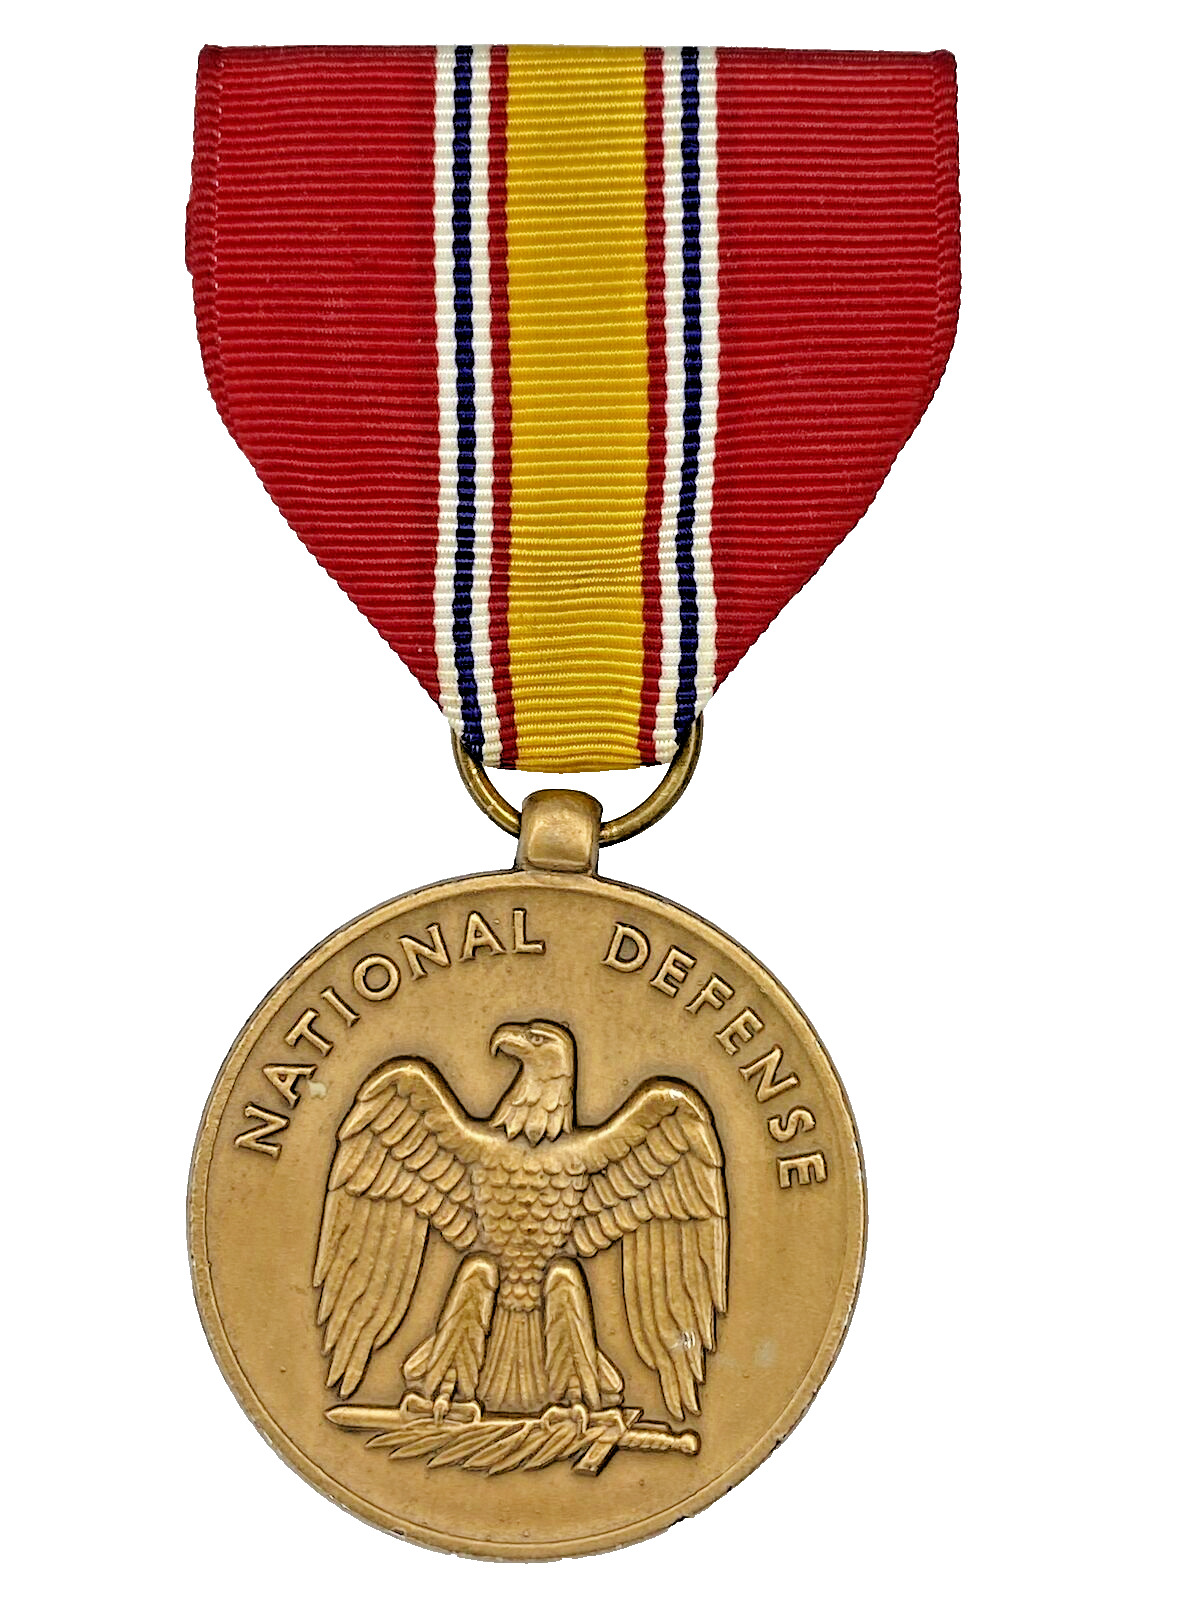 US Military National Defense Service Medal NDSM In Presentation Box Full Medal